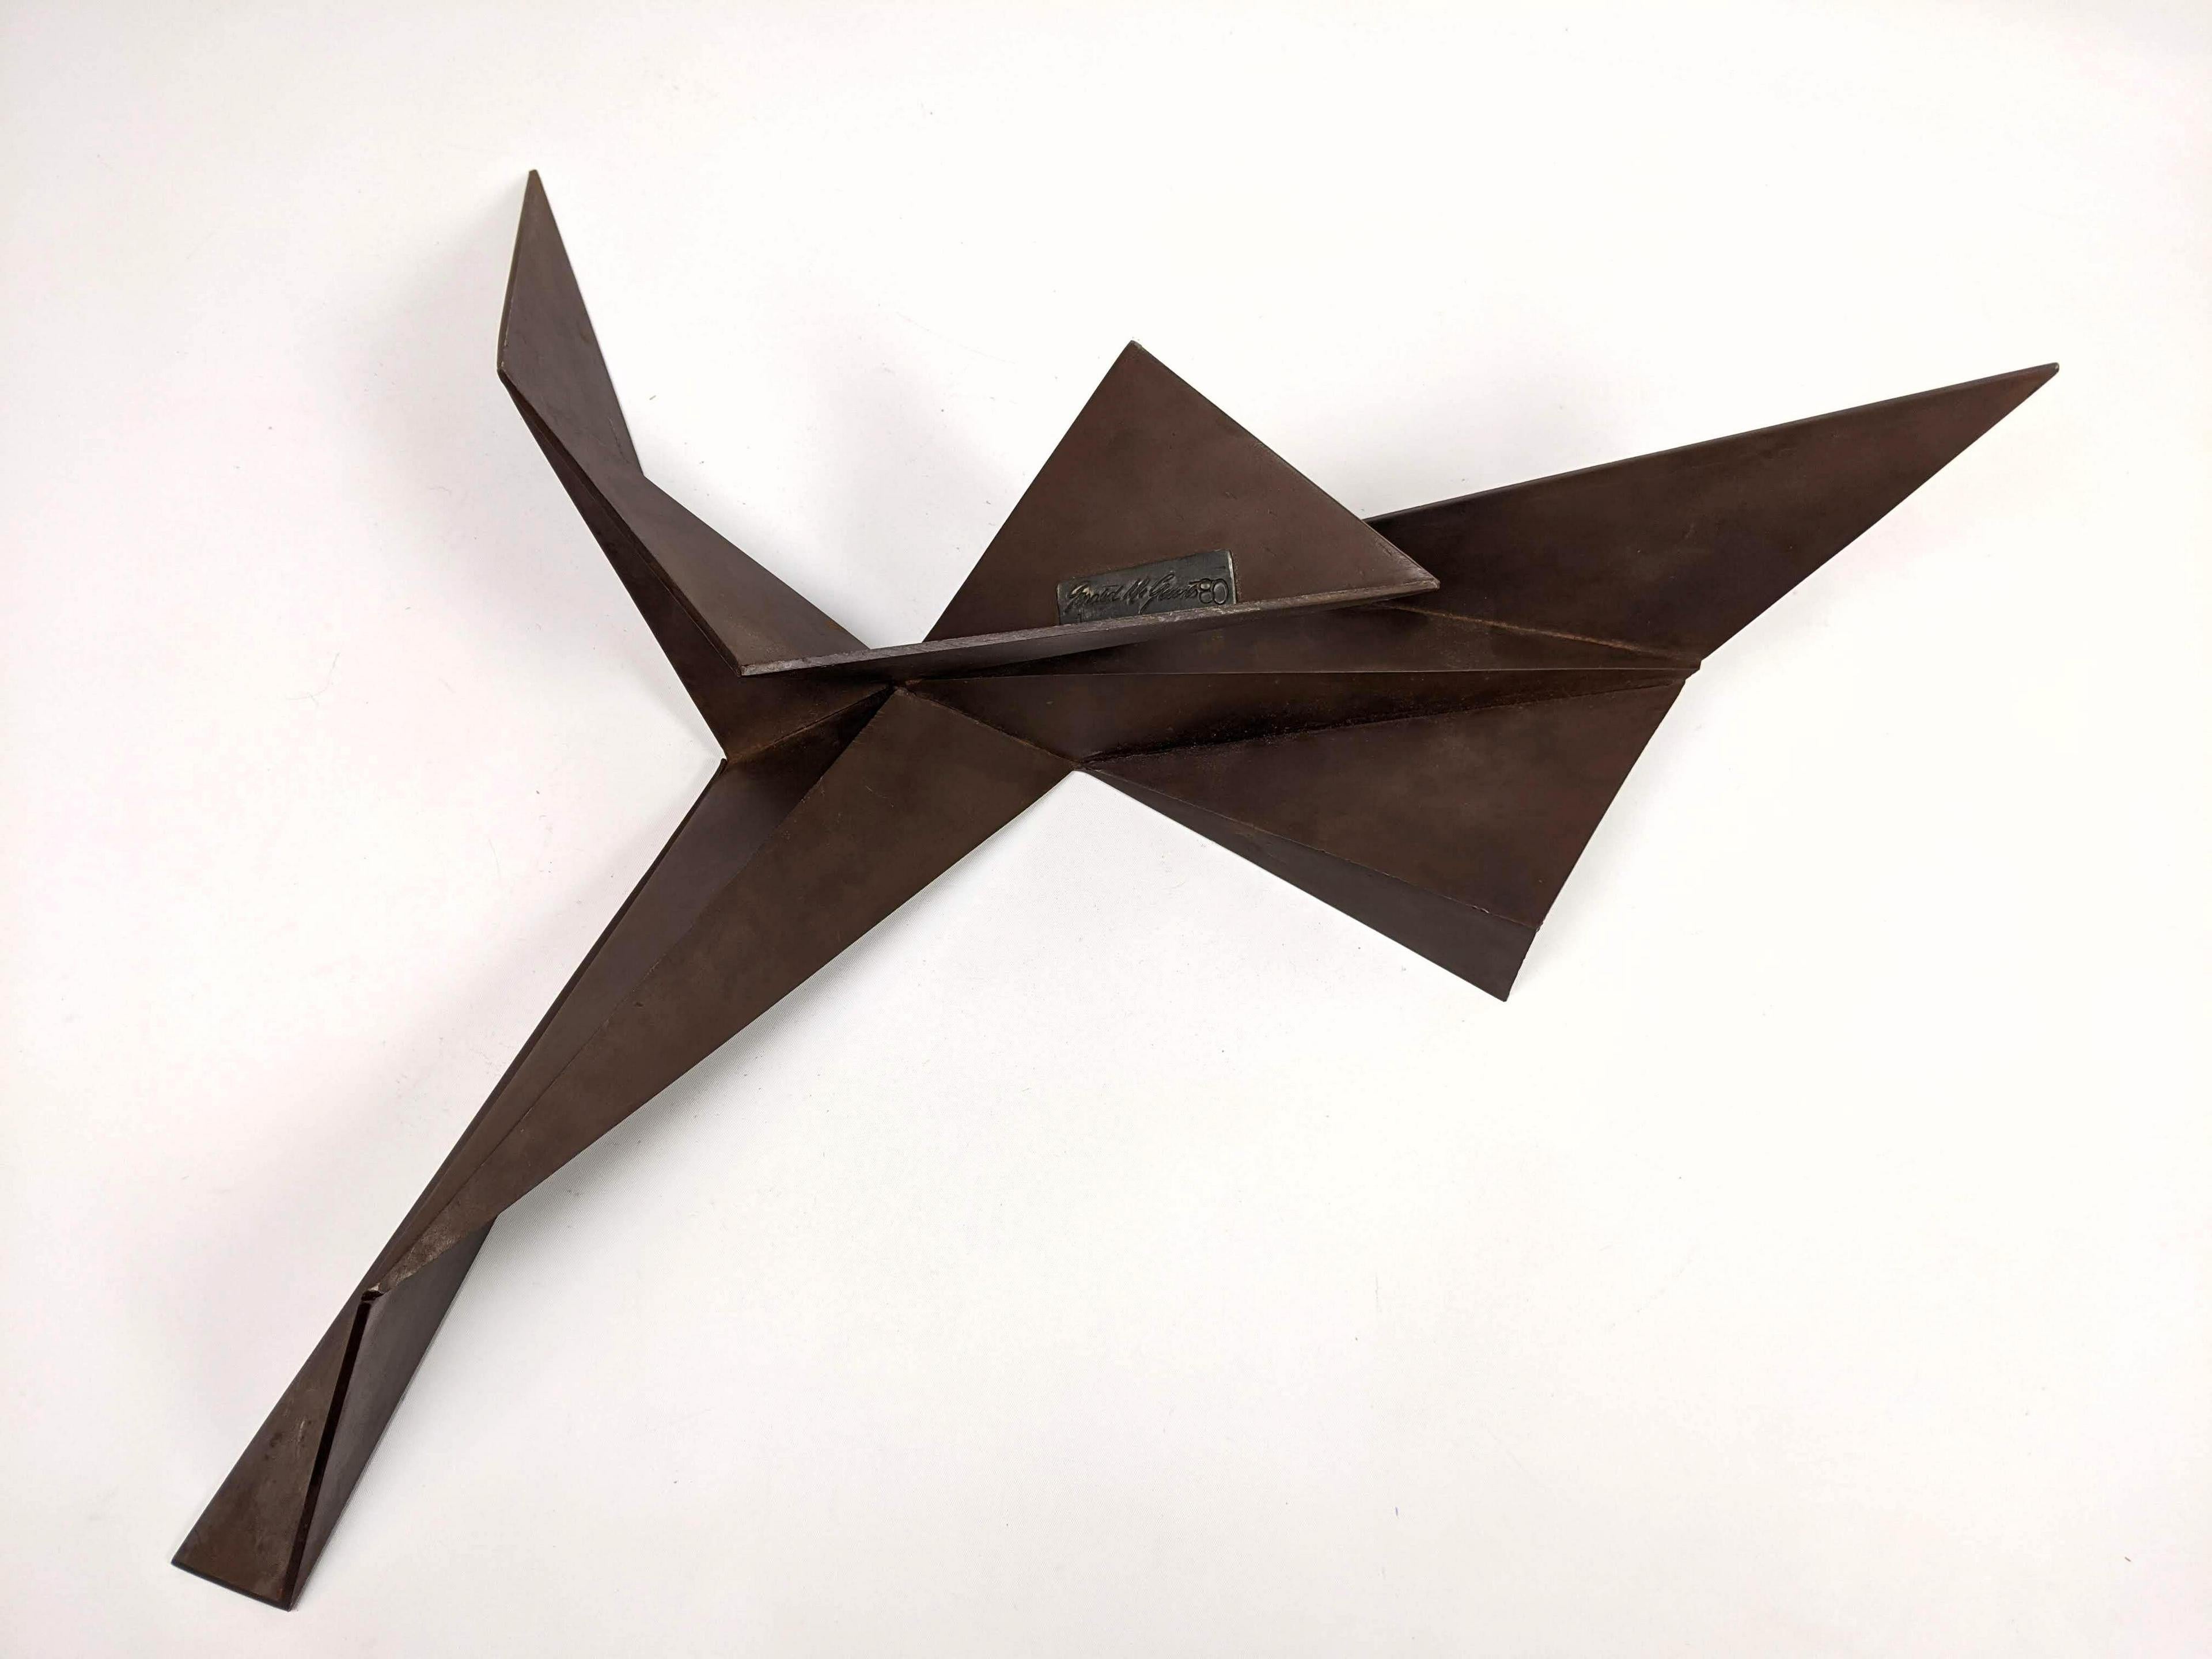 Corten Steel Abstract Geometric Folded Origami Sculpture Gerald DiGiusto  1